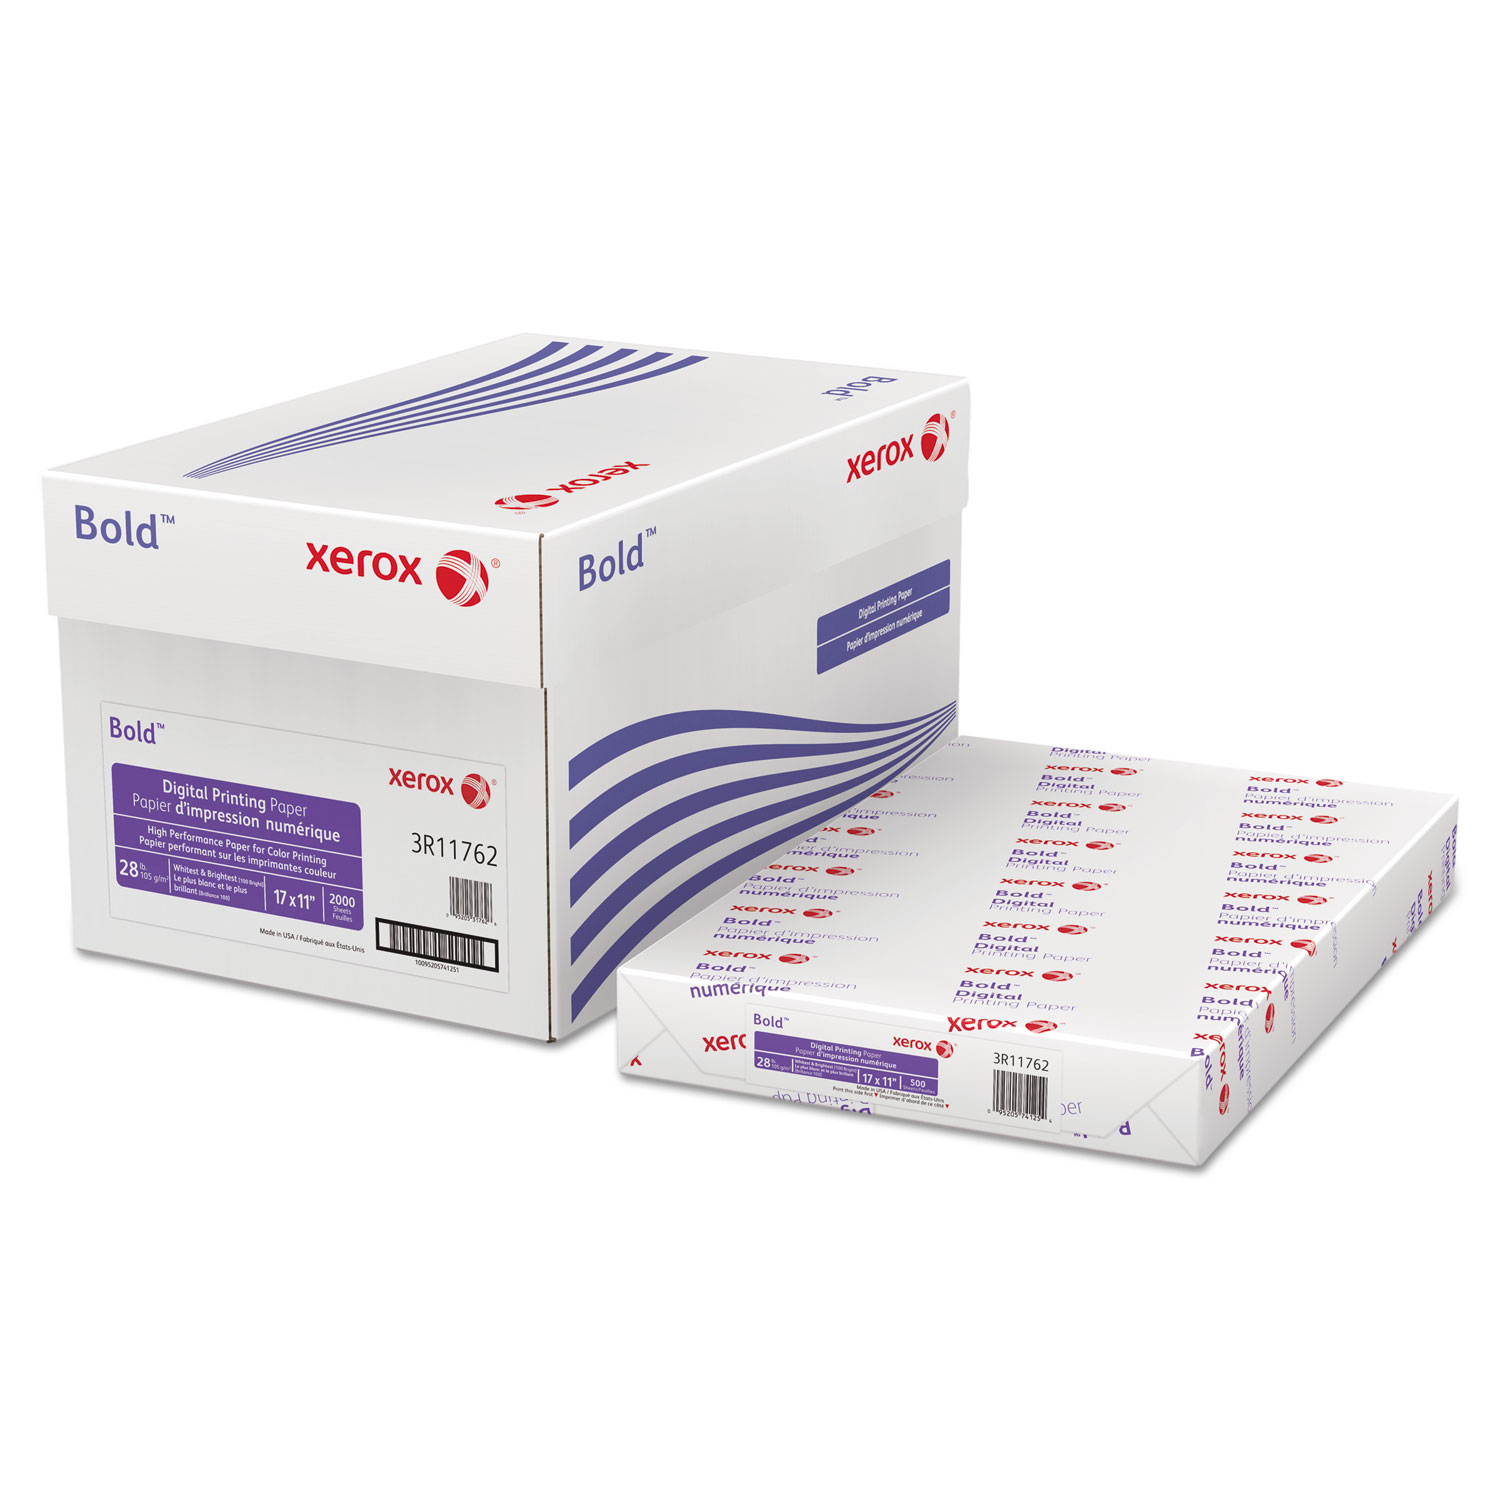  xerox 3R11762 Bold Digital Printing Paper, 100 Bright, 28lb, 11 x 17, White, 500/Ream (XER3R11762) 